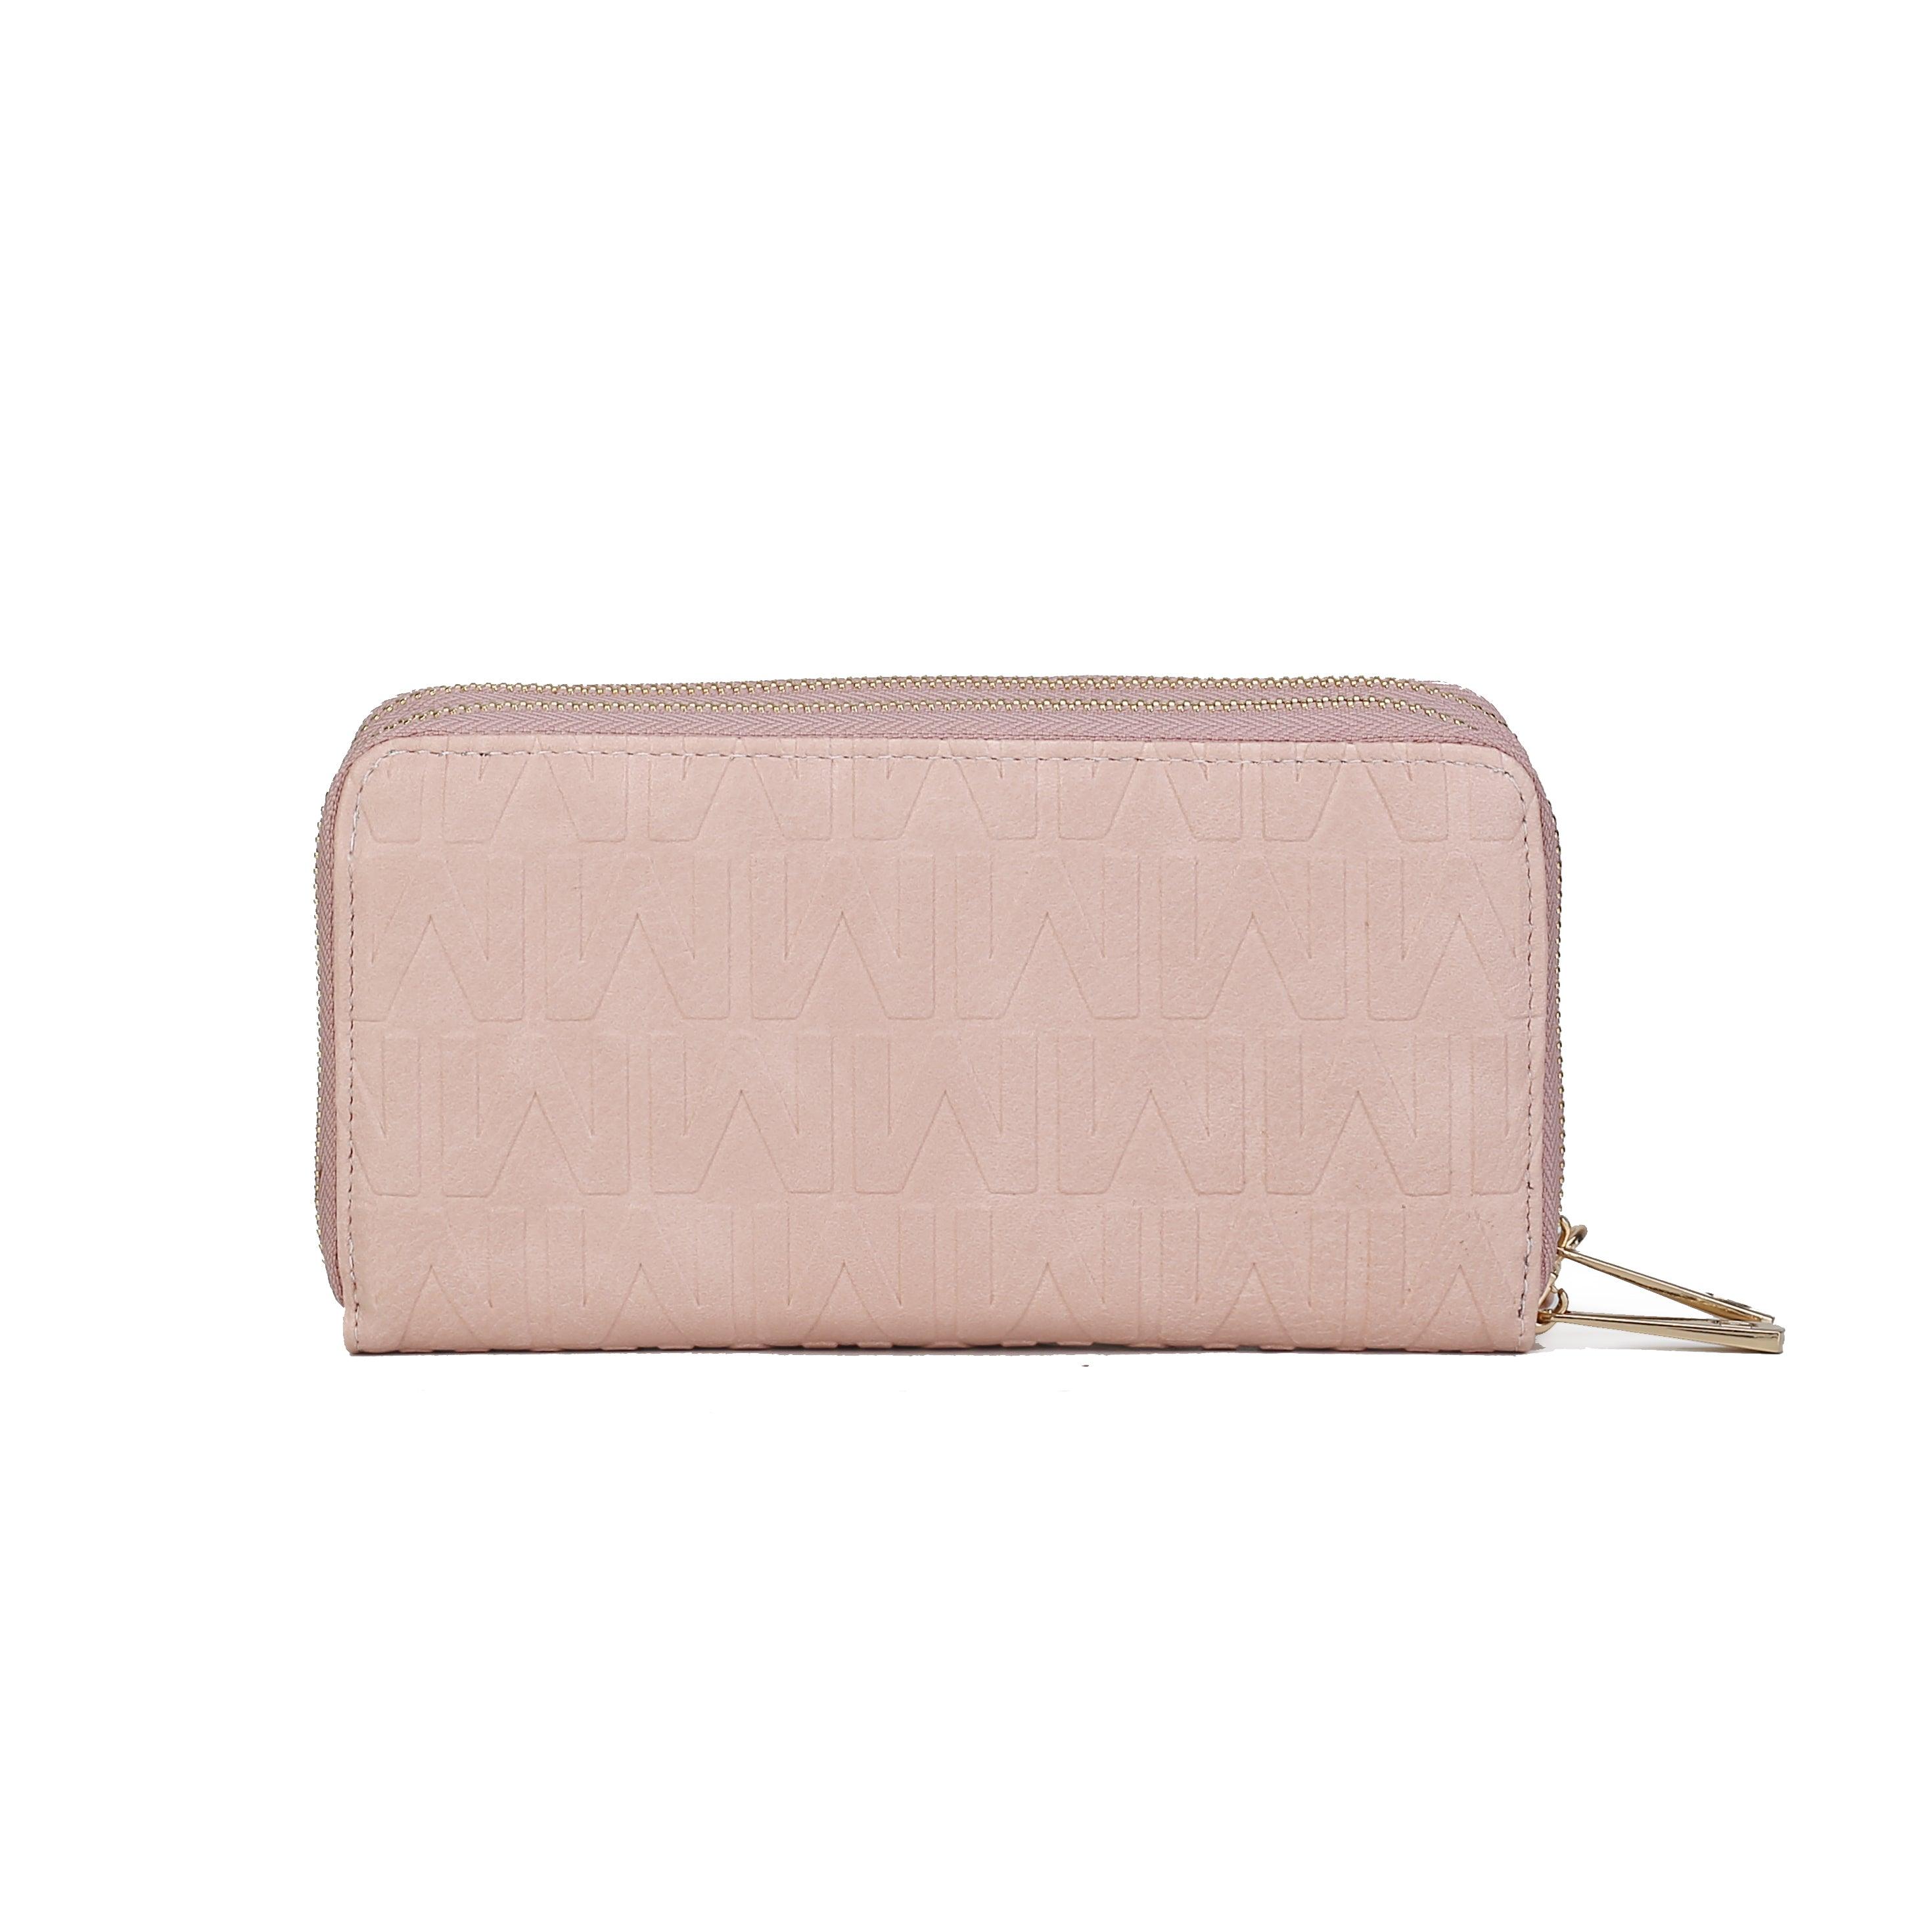 Wallets, Handbags & Accessories Aurora M Signature Wallet Handbag Women